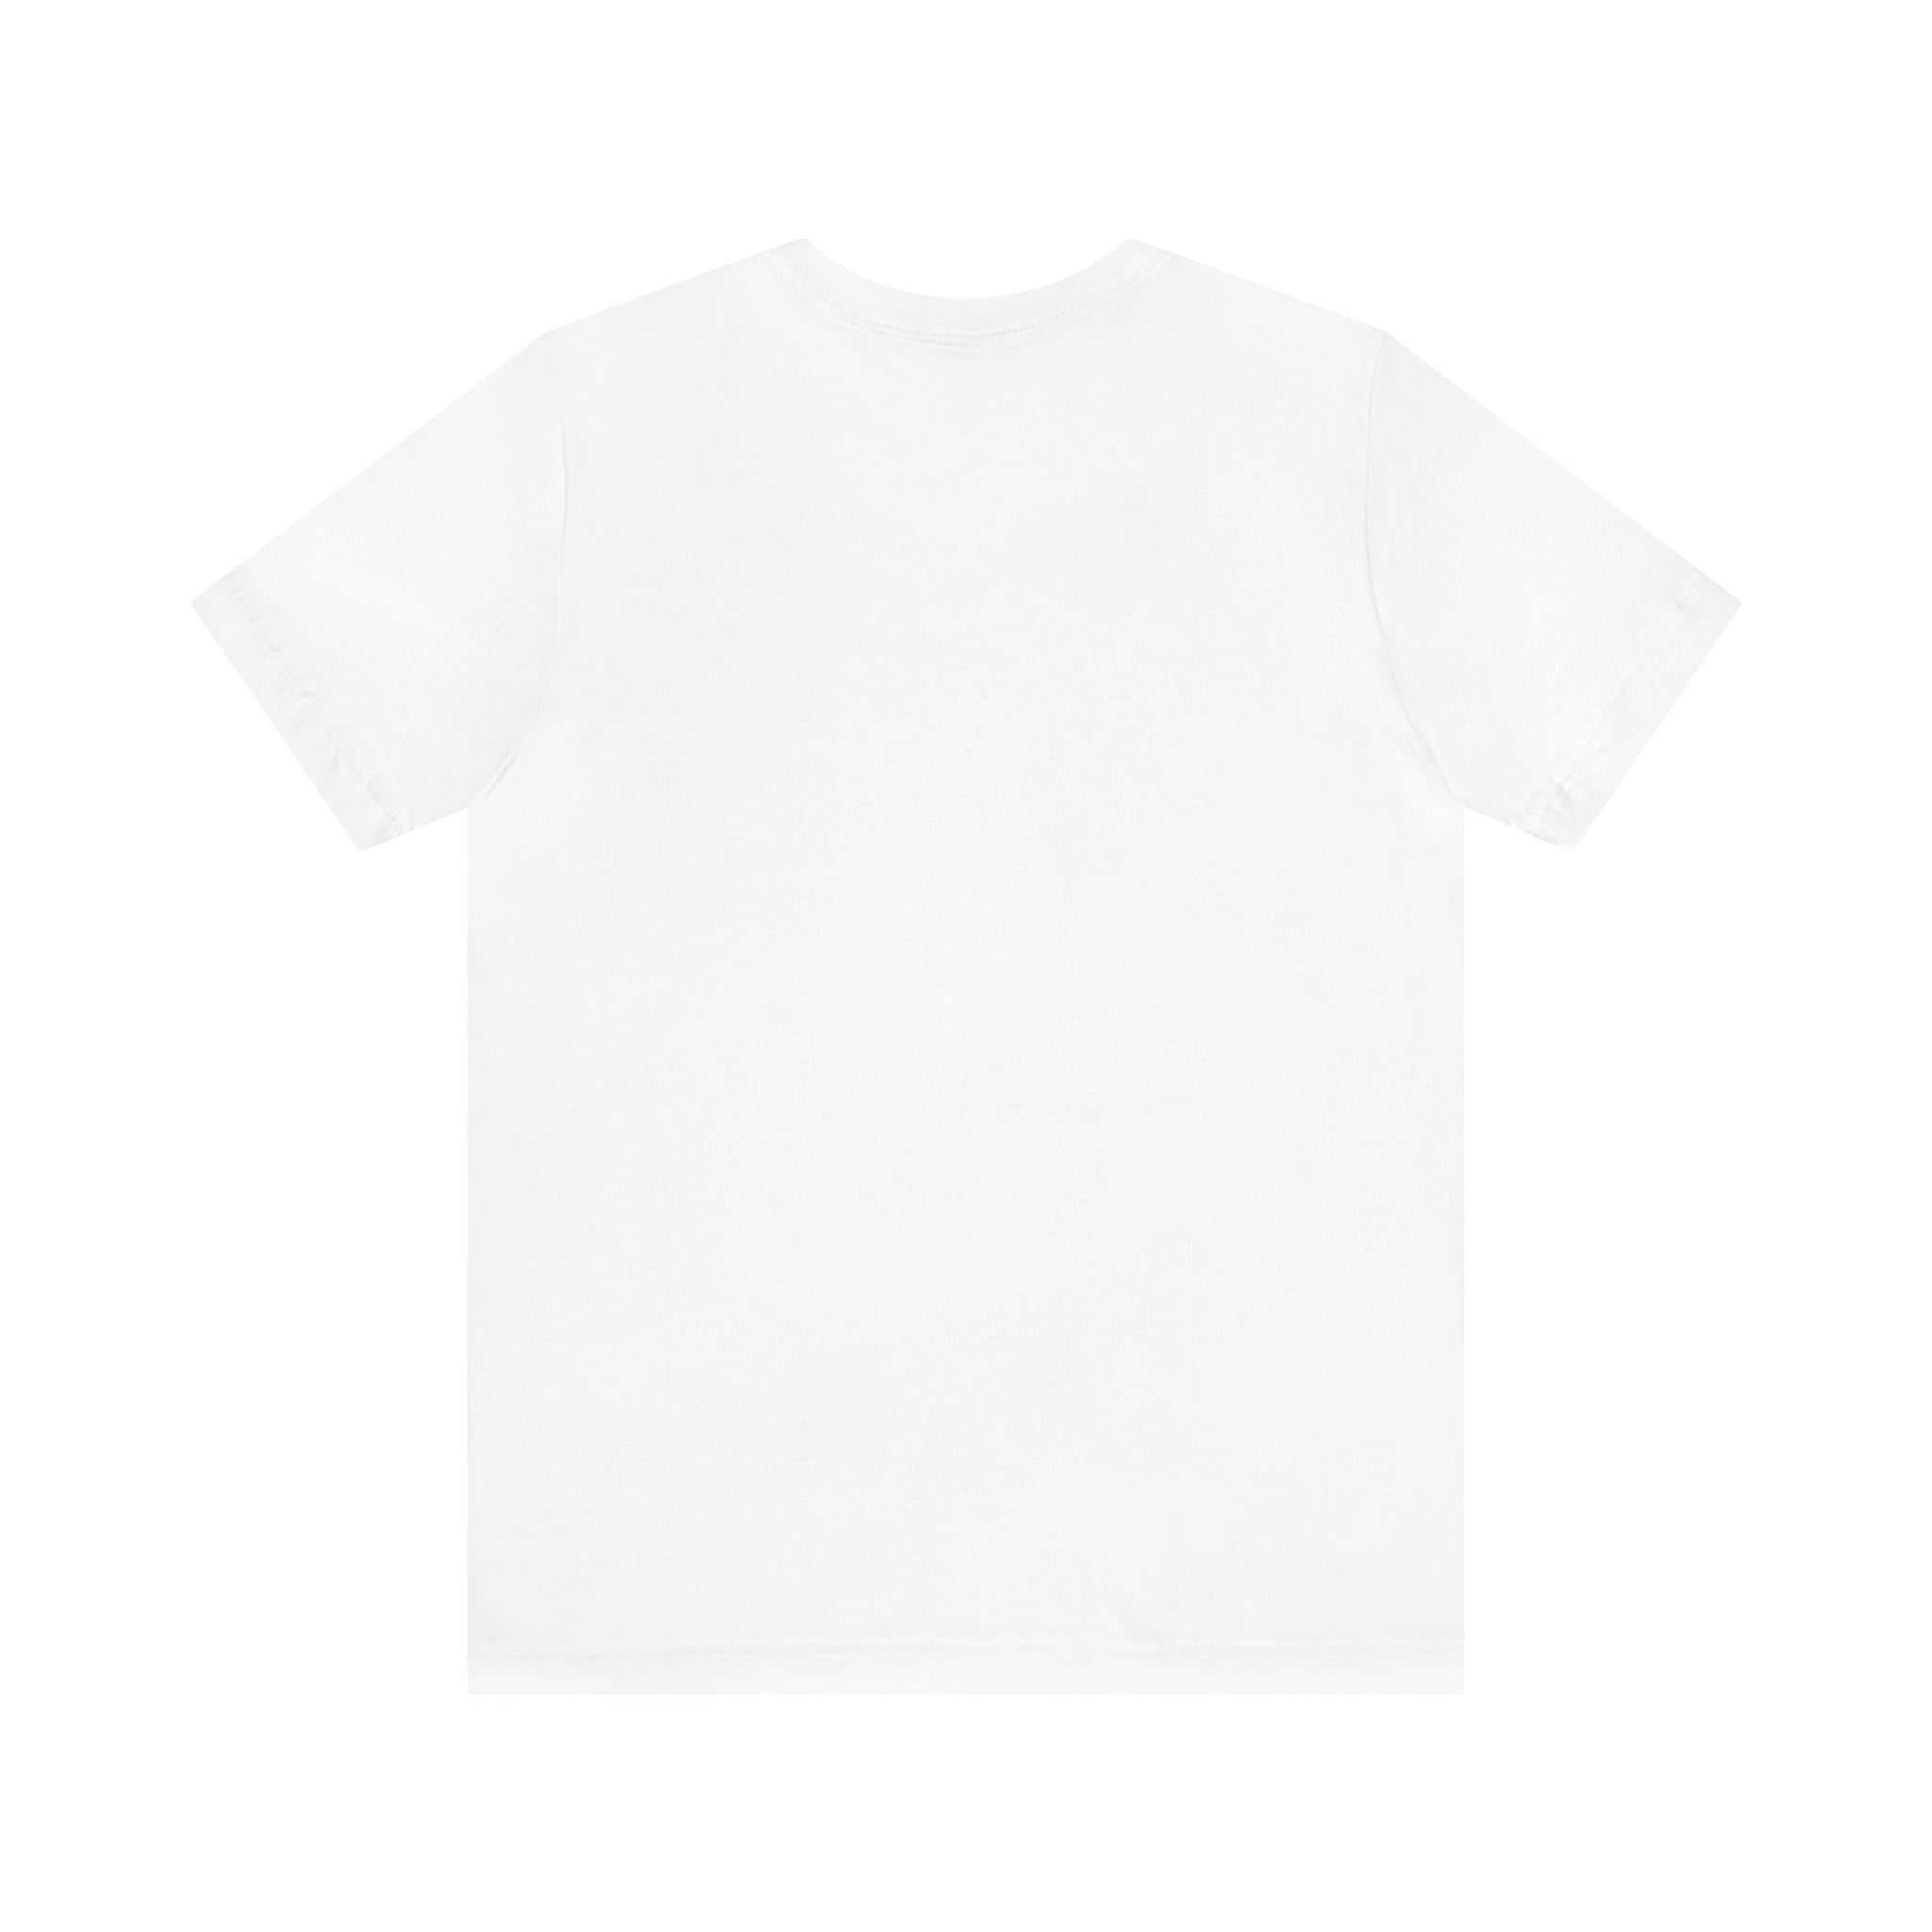 Atomluft - Life (White) T-Shirt